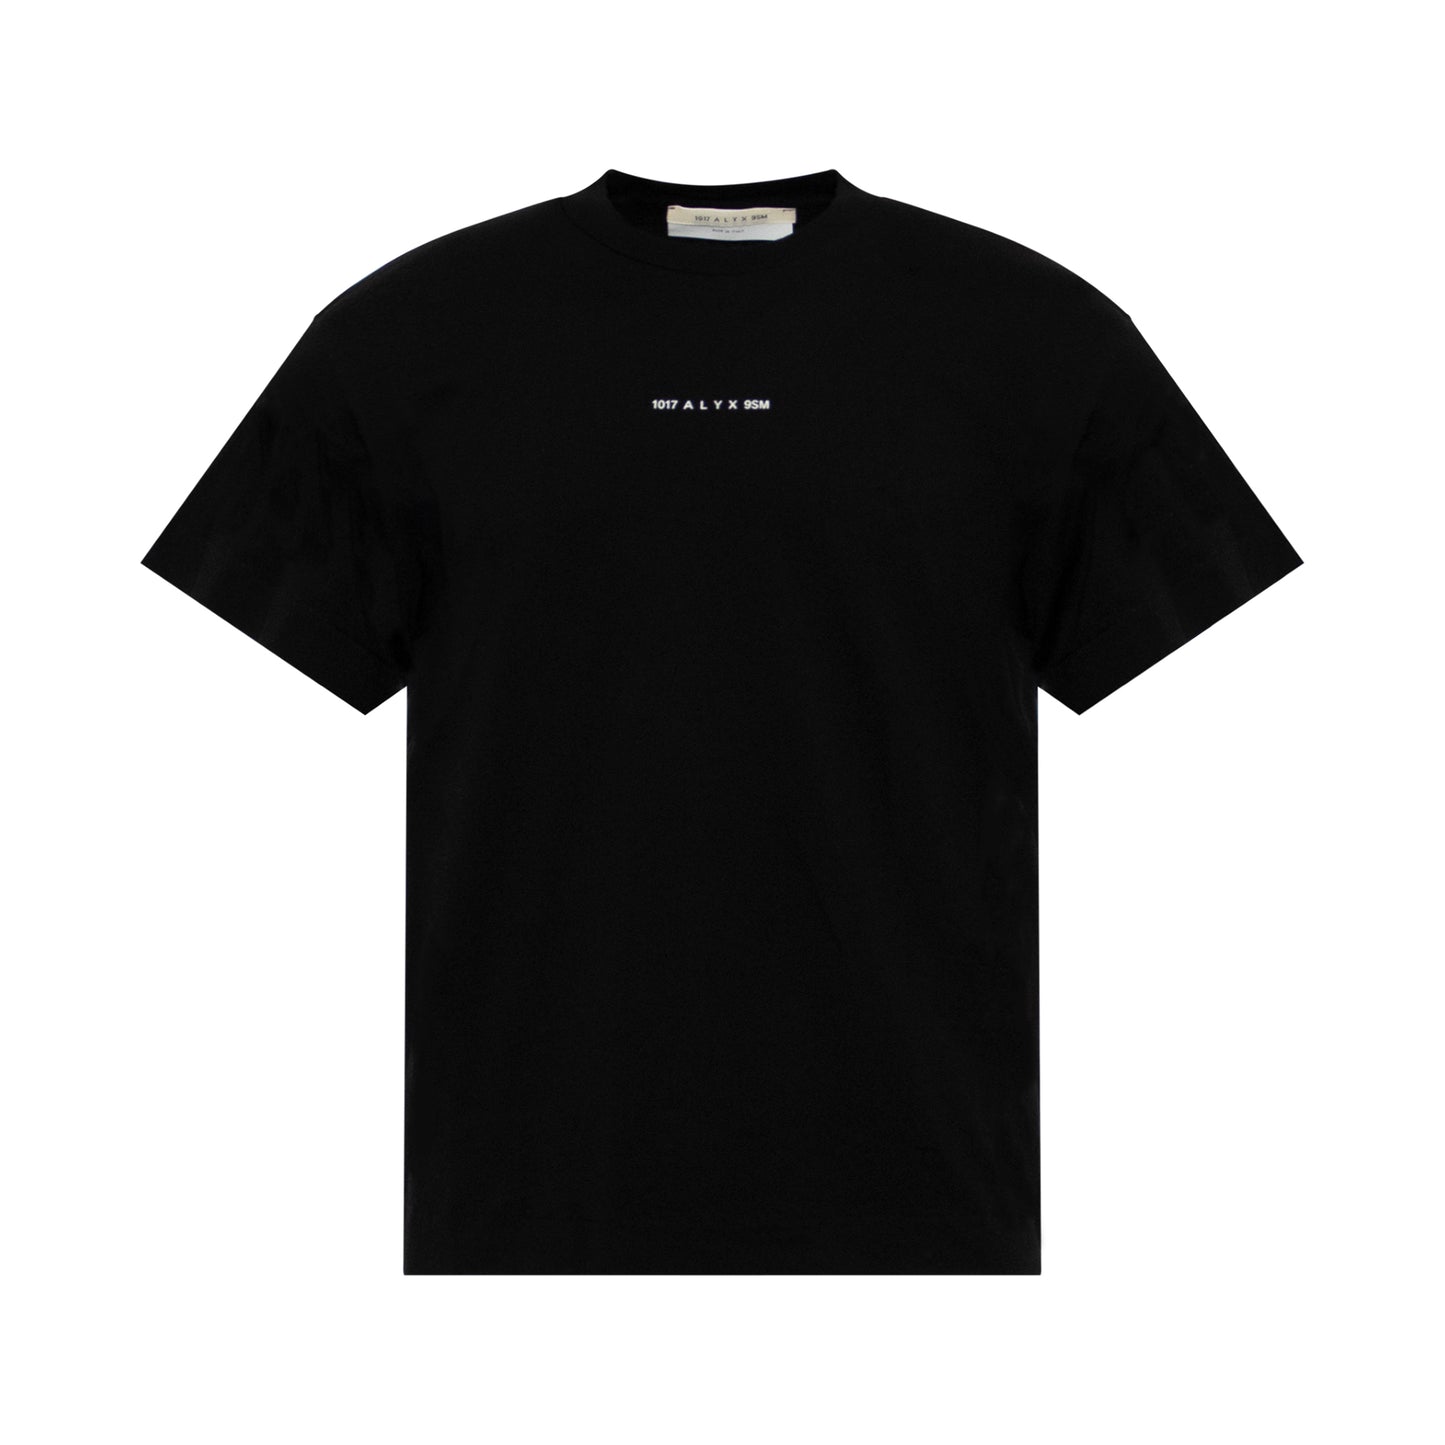 1017 ALYX 9SM x Marais Anniversary T-Shirt in Black